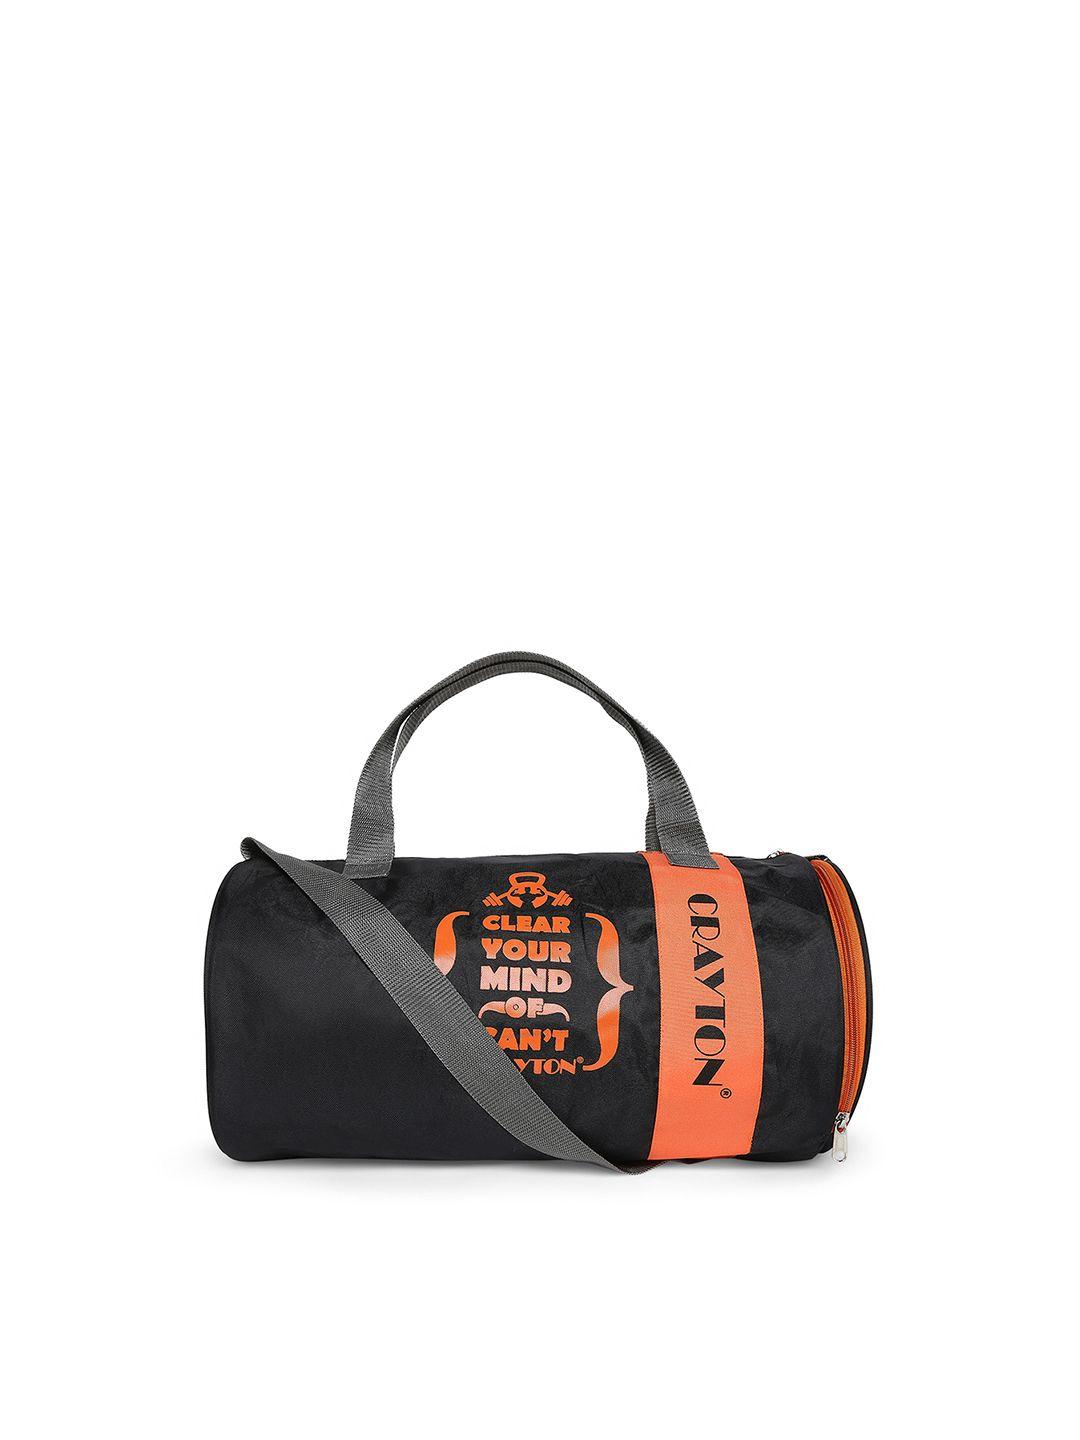 crayton black & orange printed duffel sports or gym bag